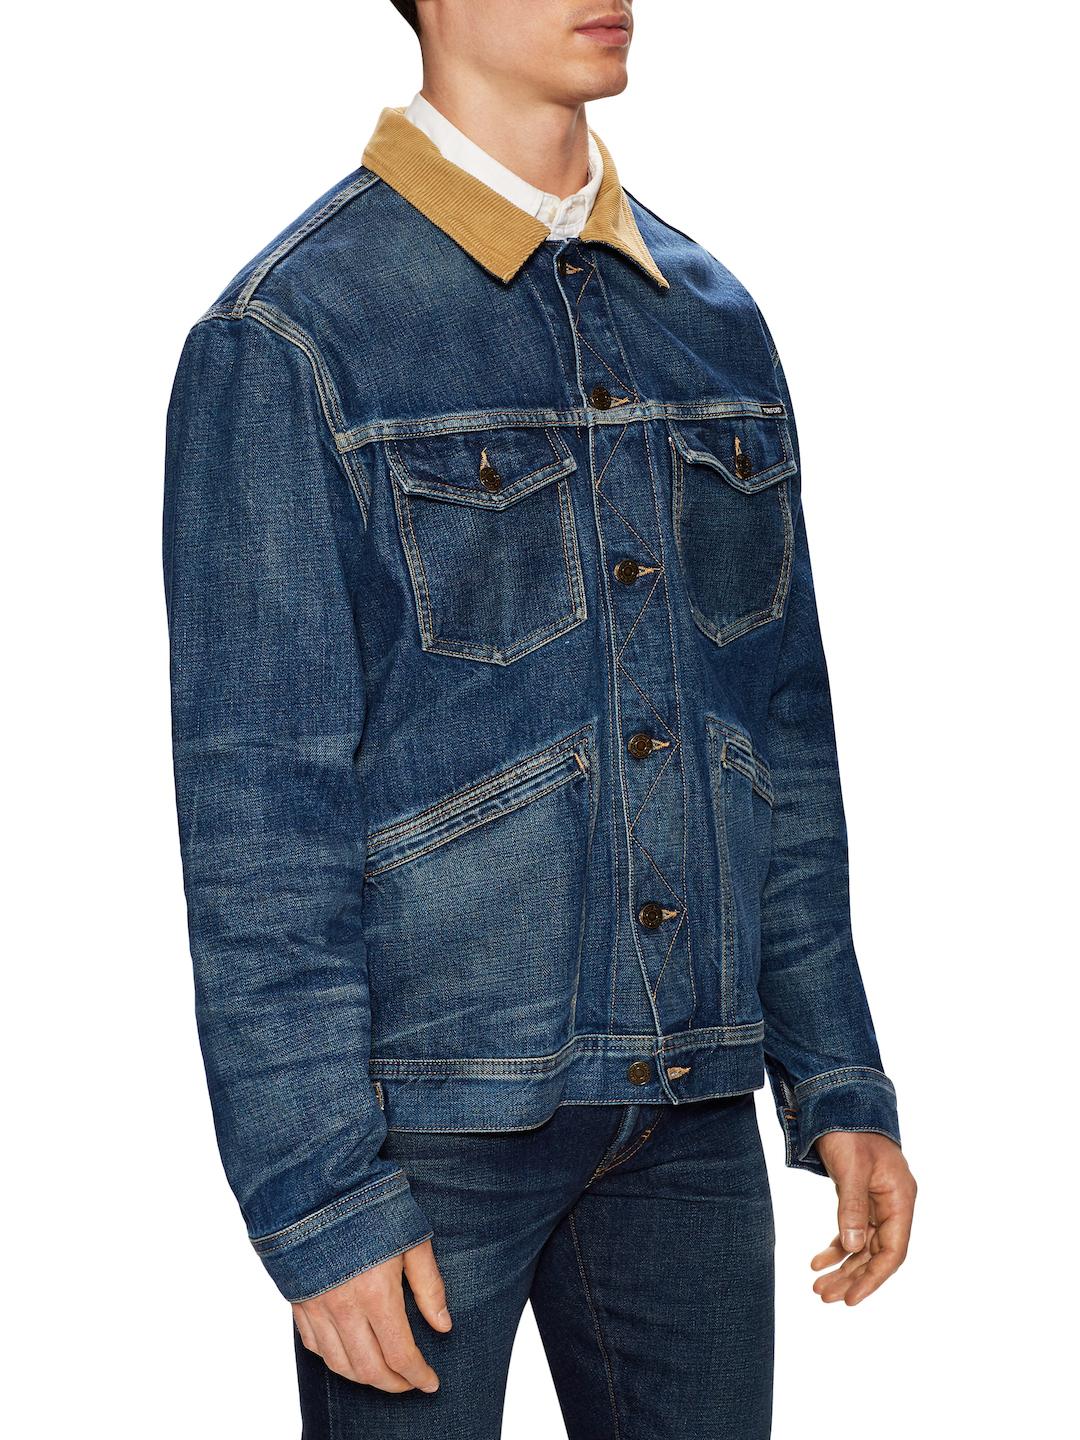 Lyst - Tom Ford Corduroy Collar Denim Jacket in Blue for Men